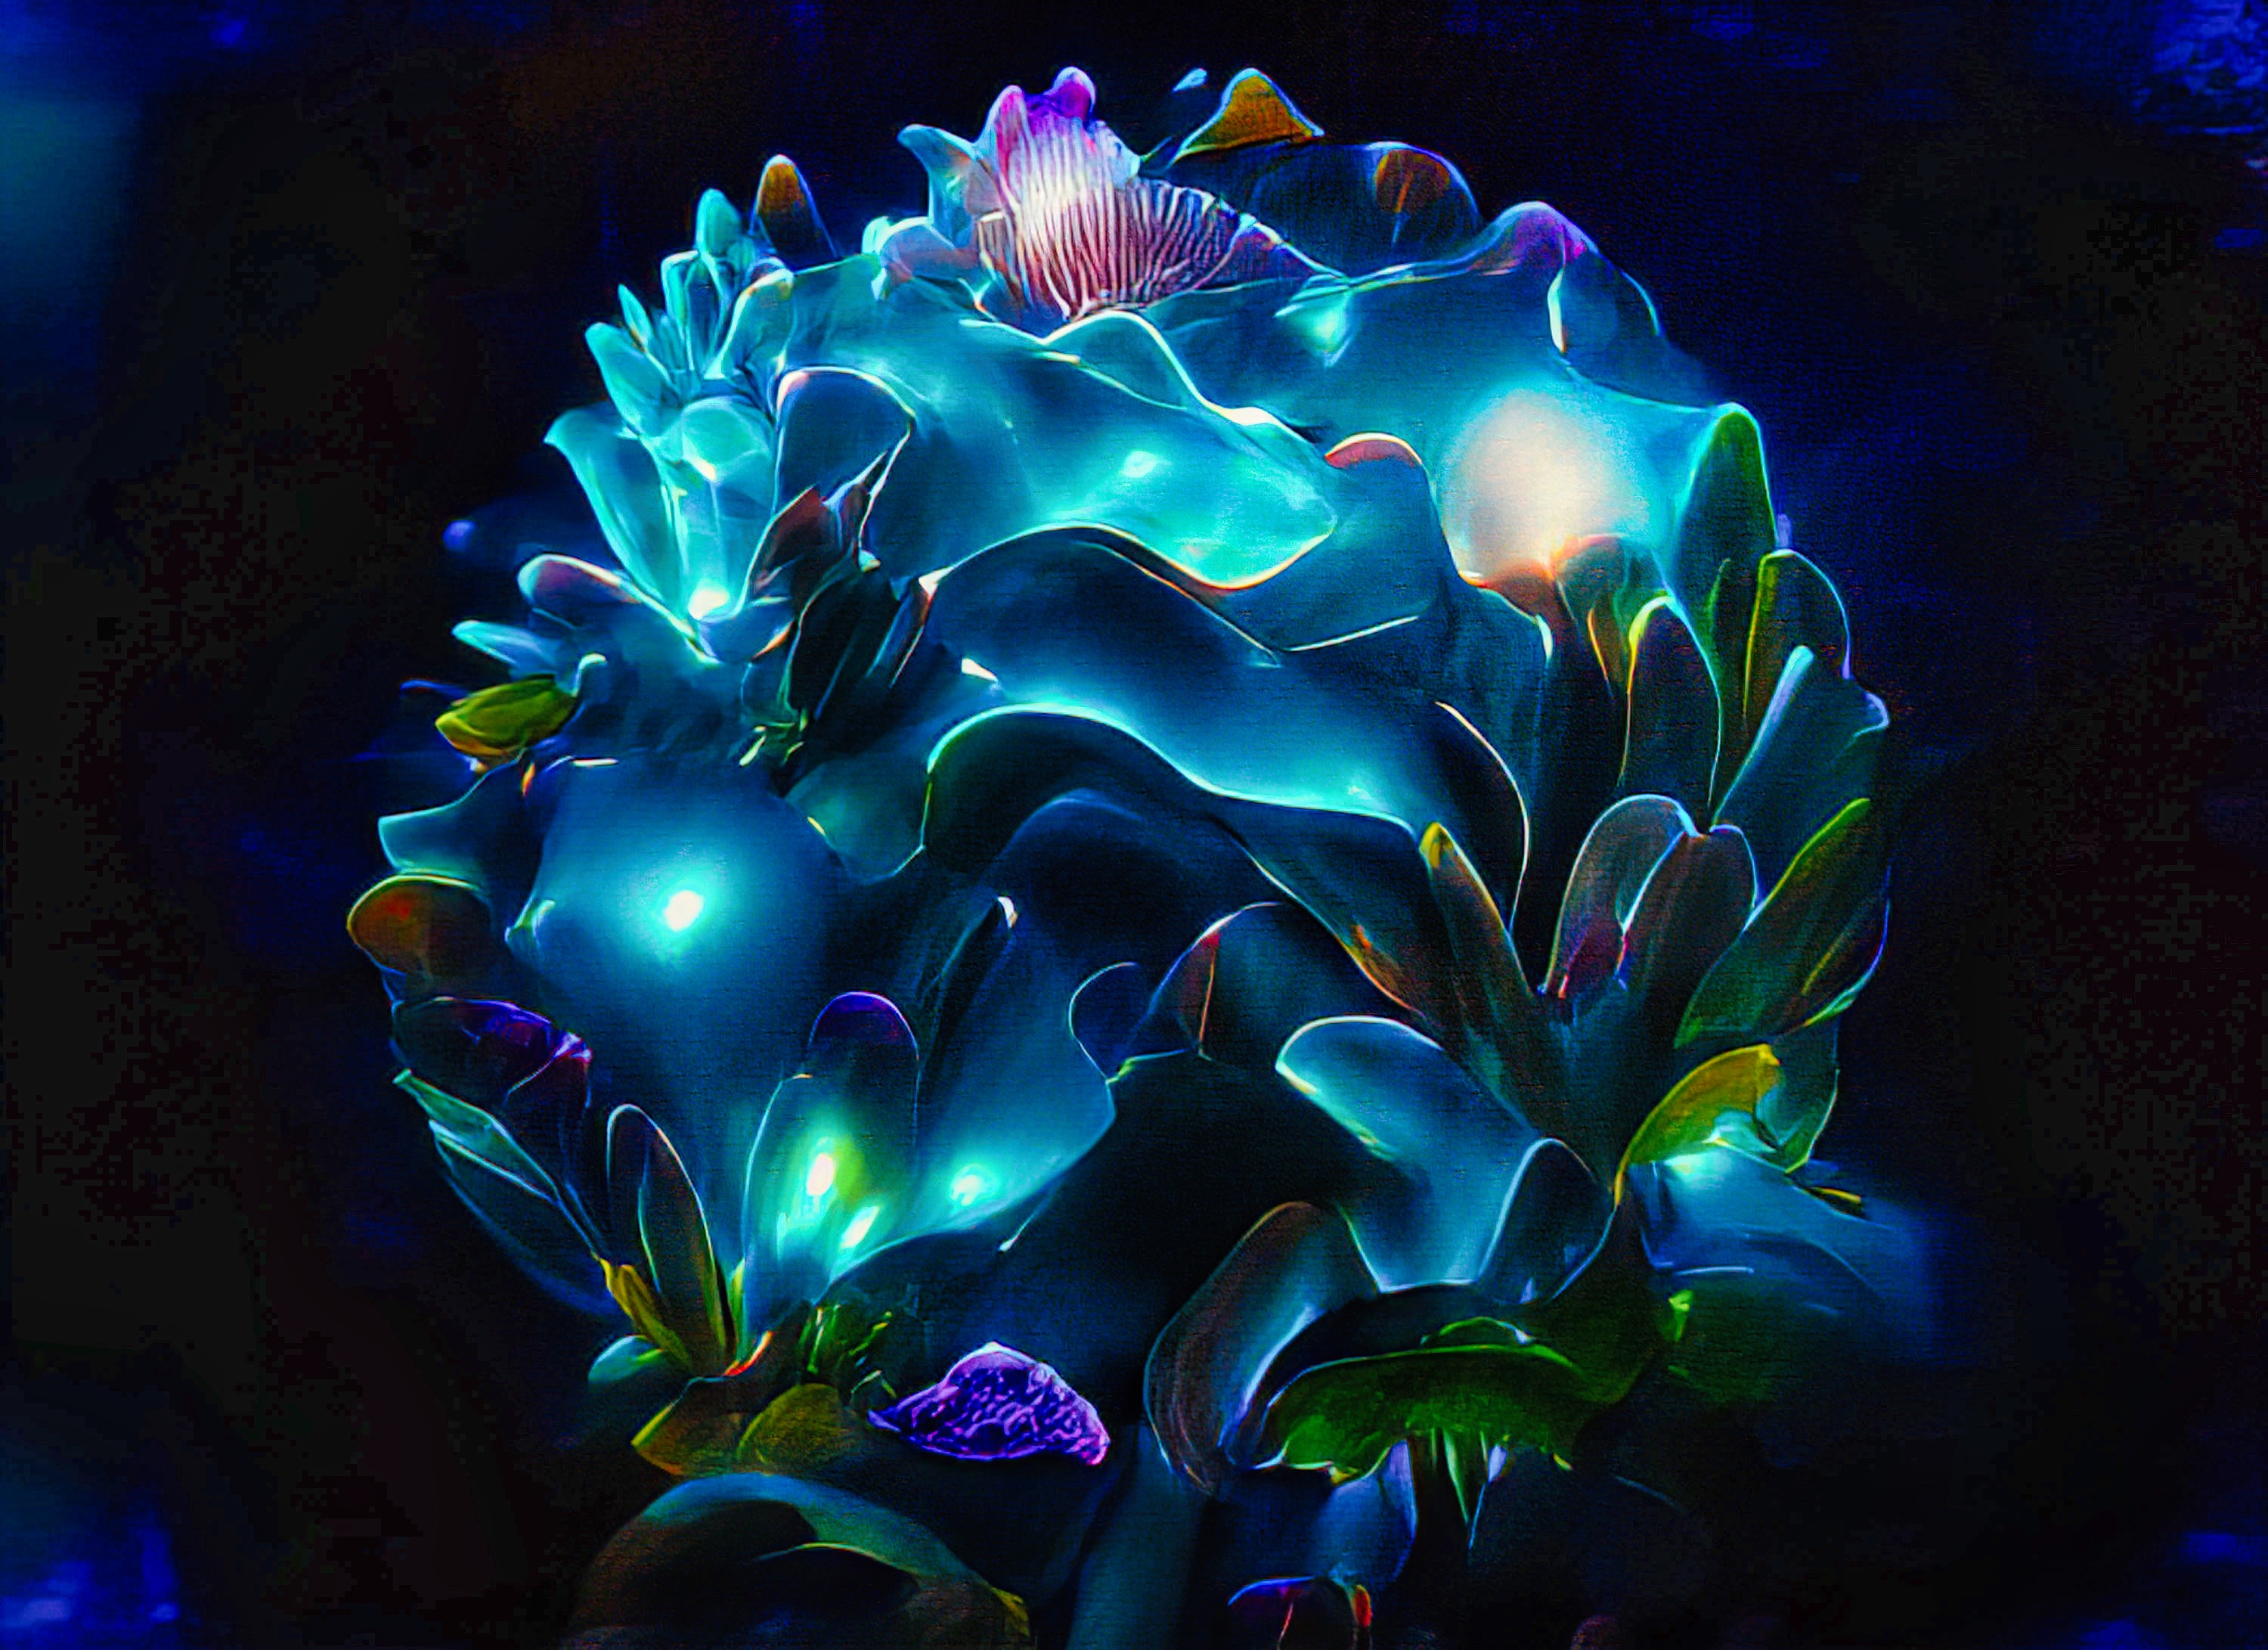 The Corals Genesis #86